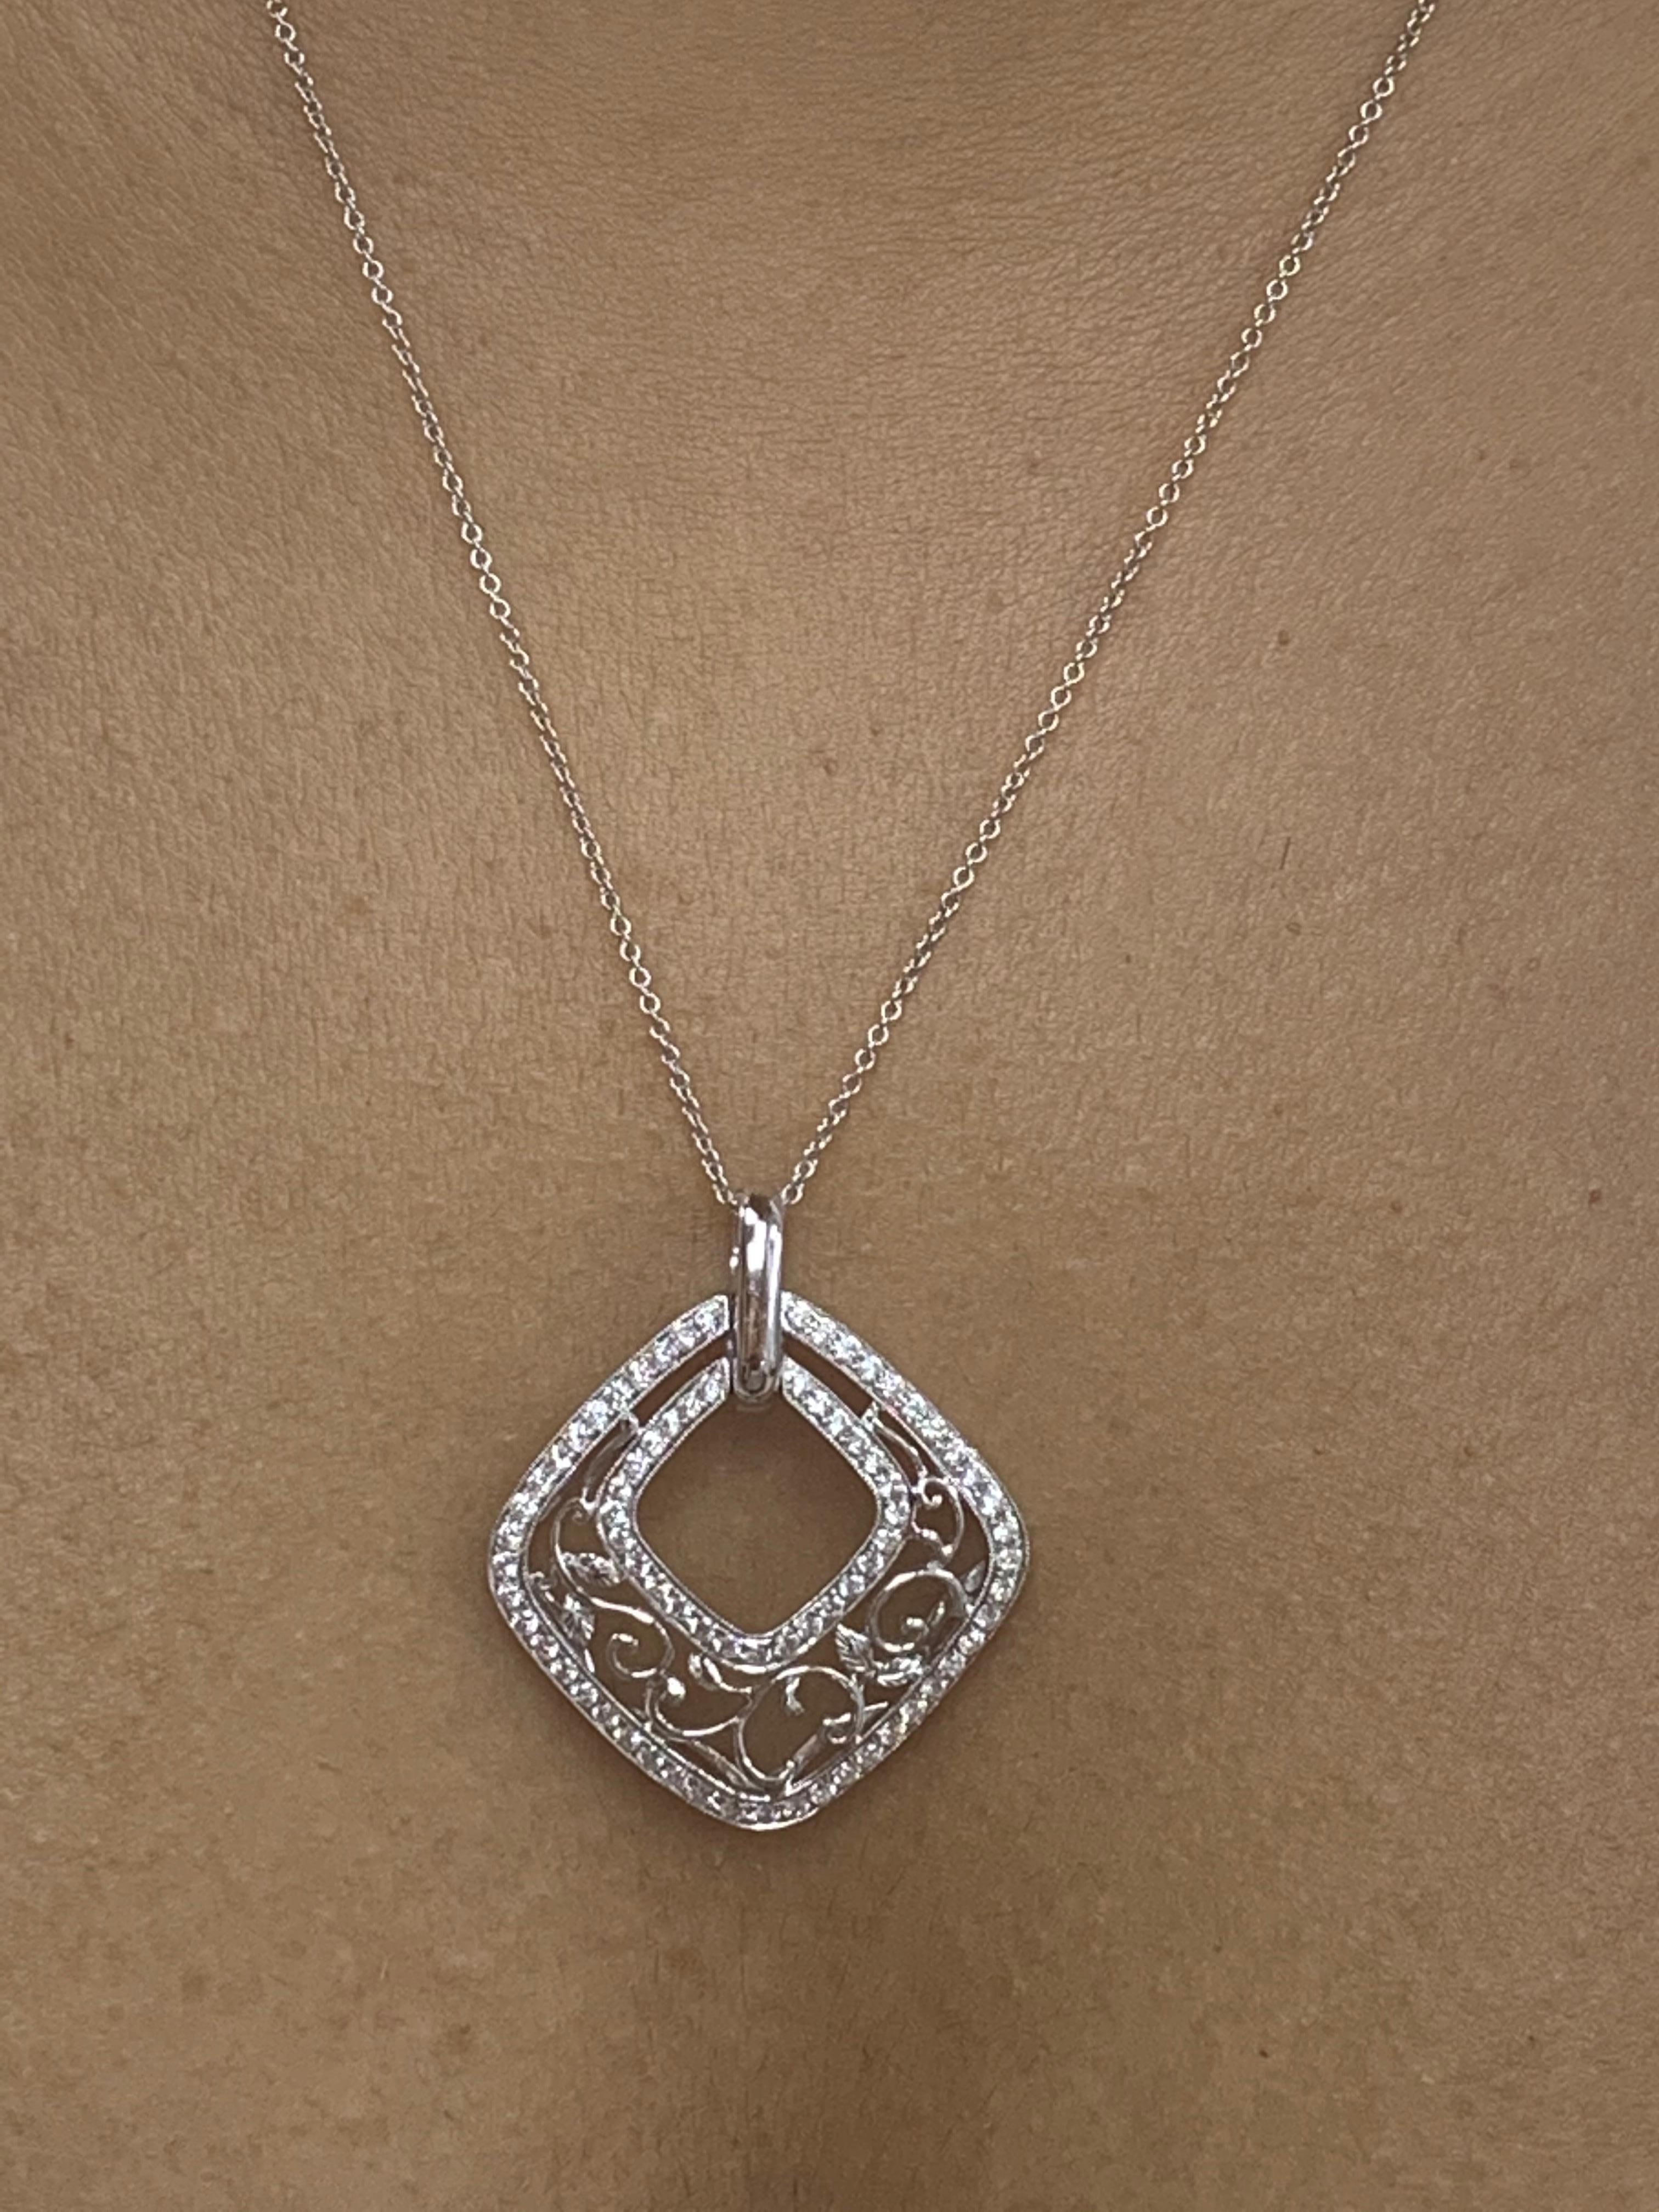 0.79 Carat Vintage Style Diamond Pendant in 18K White Gold For Sale 4